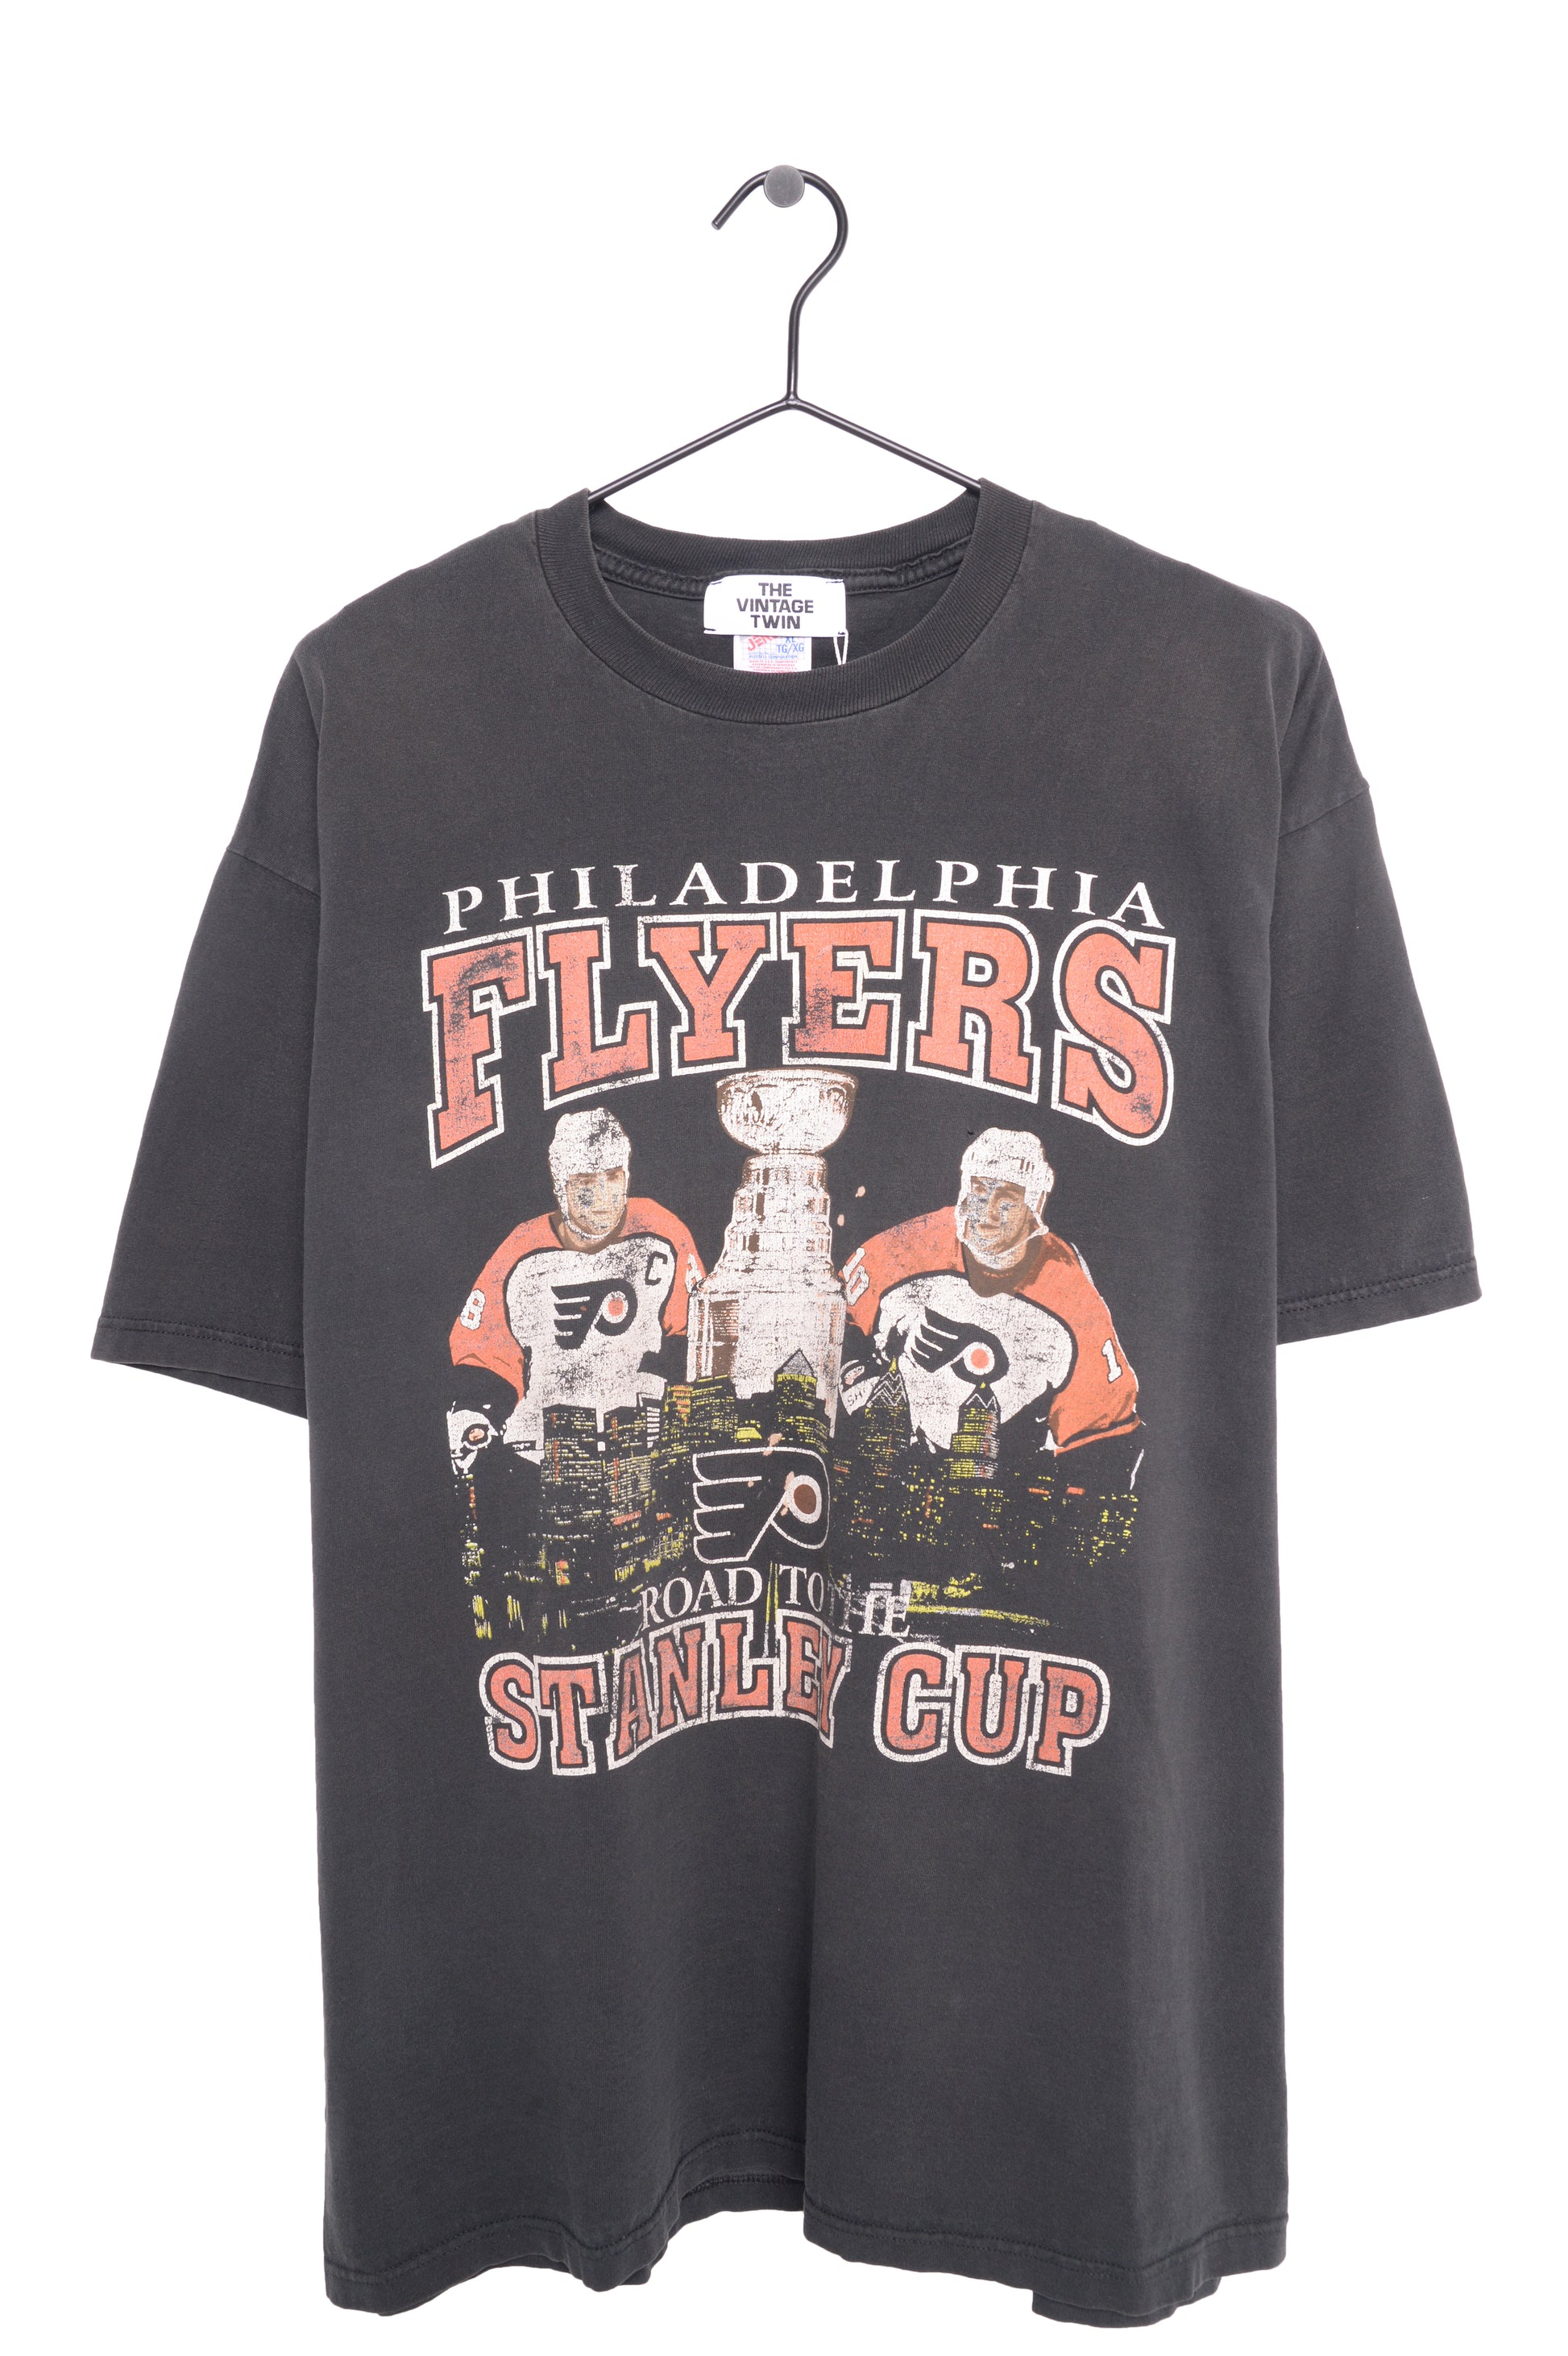 Philadelphia Phillies Text logo Distressed Vintage logo T-shirt 6 Size